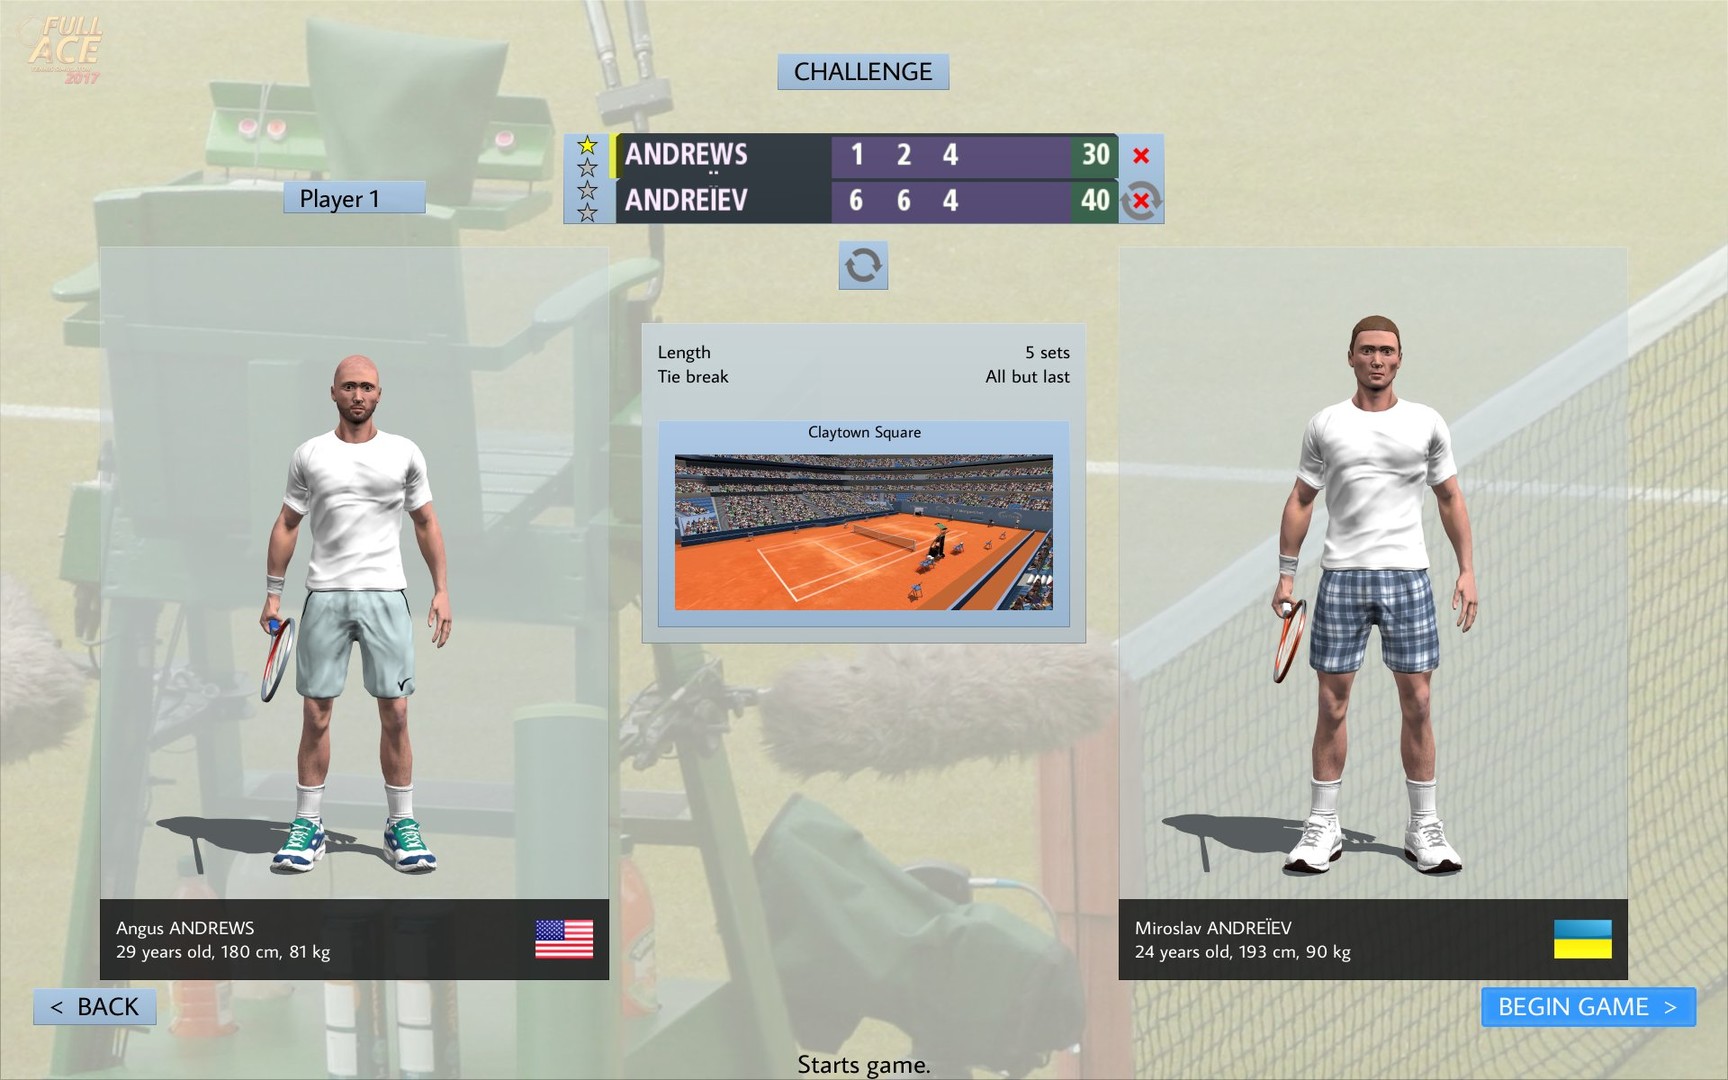 Full Ace Tennis Simulator on Steam